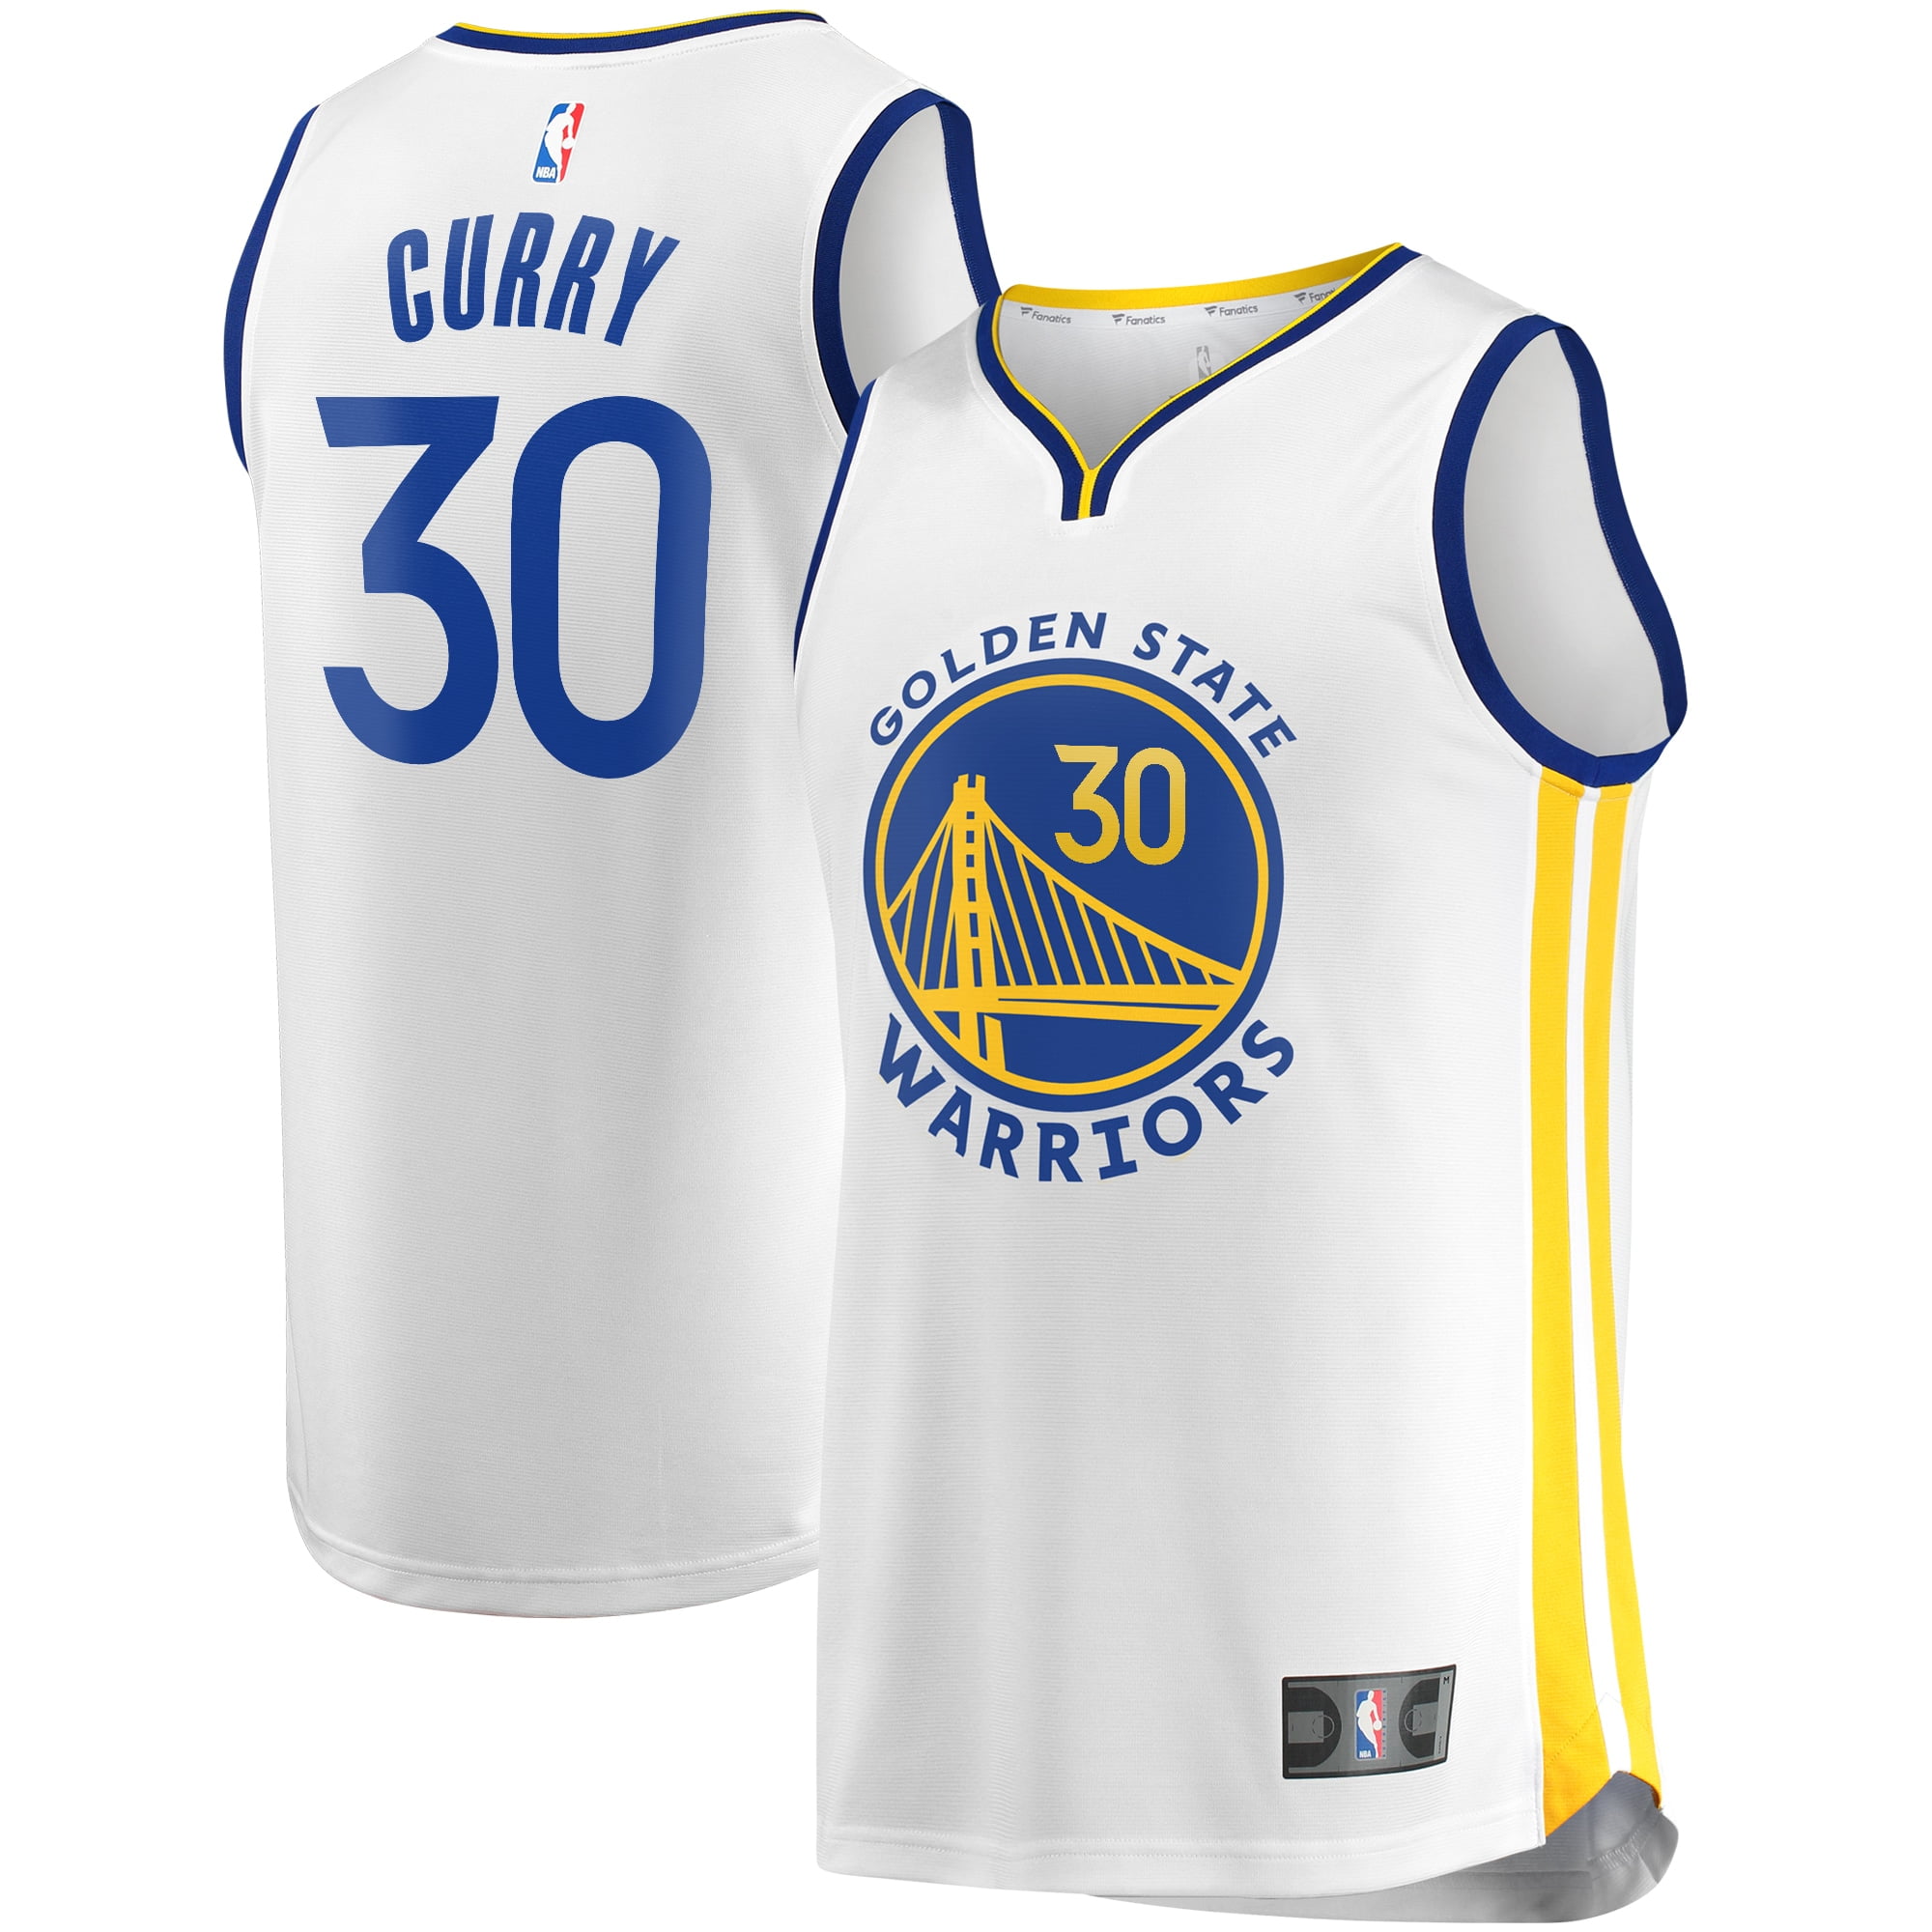 Mens Basketball T-Shirt Sleeveless Vests Basketball Jersey Stephen Golden State NO.30 Warriors Curry Player Jersey Basketball Uniform Quick Drying Breathable Sweatshirt 